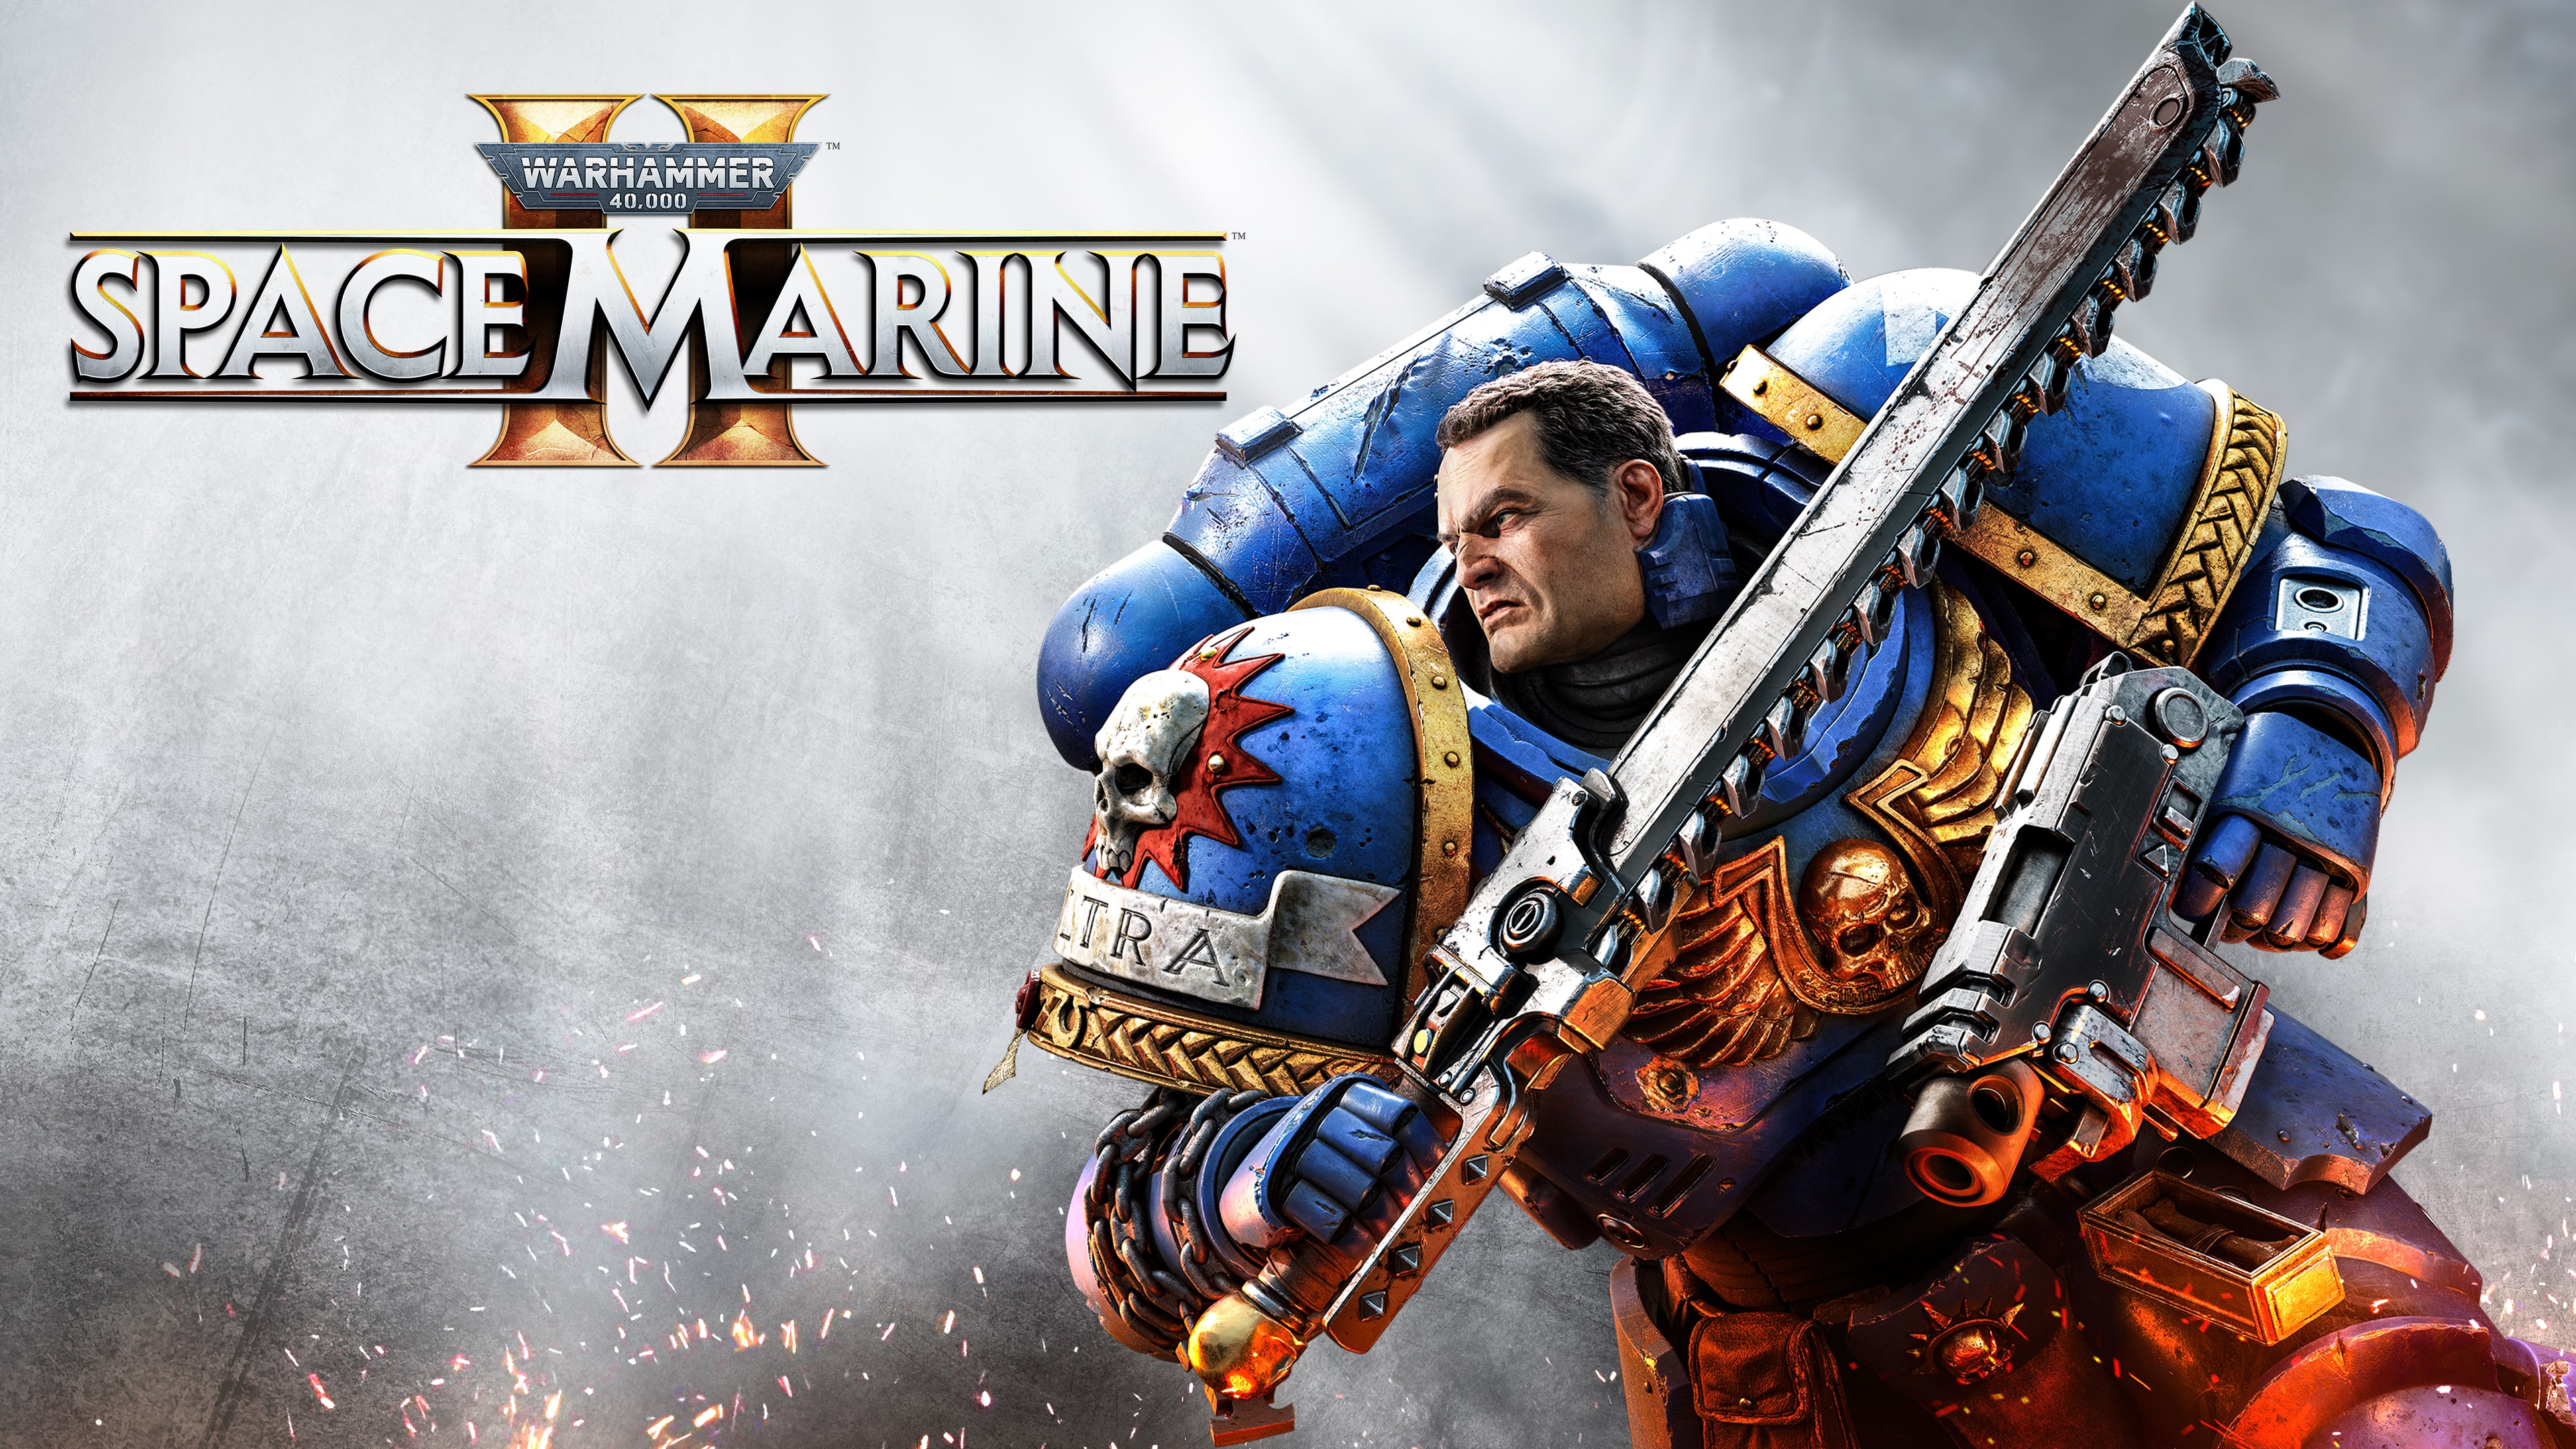 Warhammer 40,000: Space Marine 2 (日语, 韩语, 简体中文, 繁体中文, 英语)